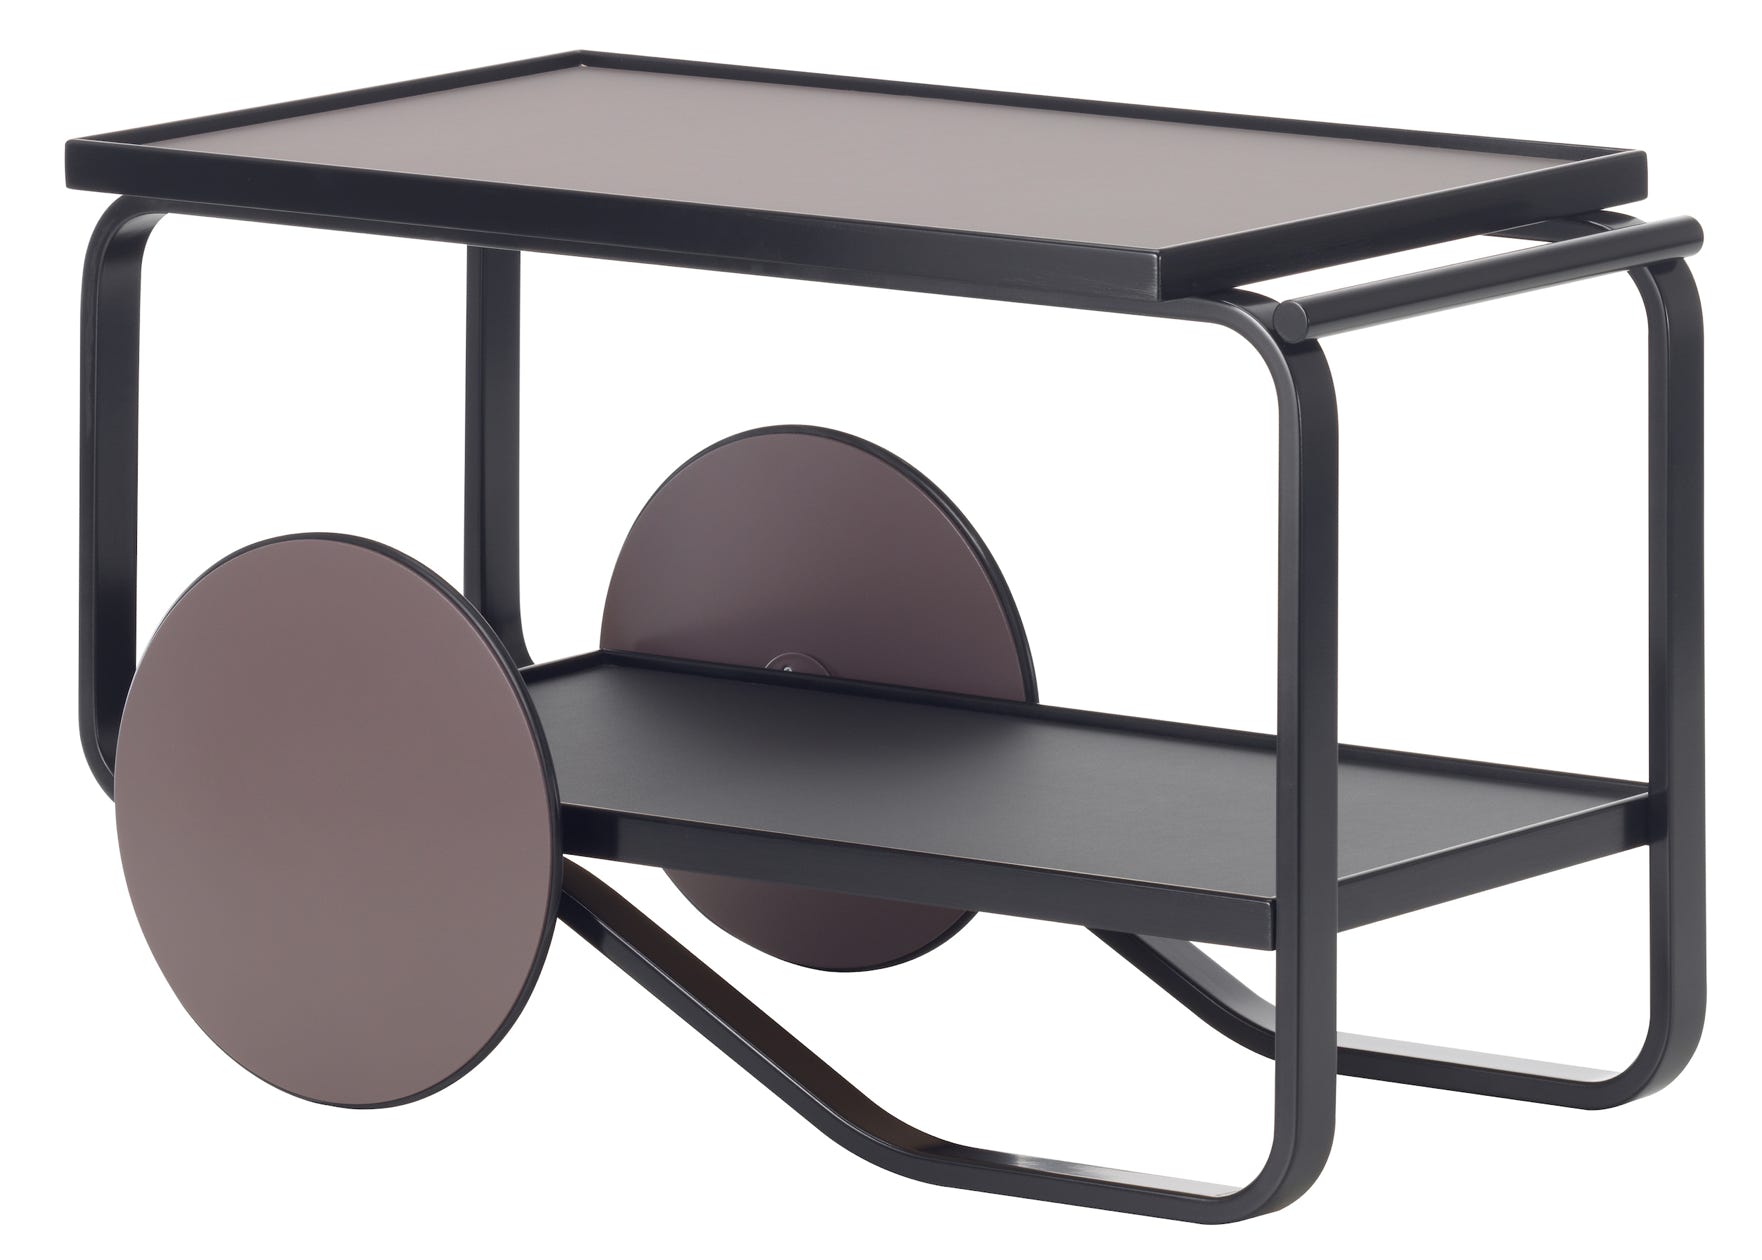 Table Roulante 901 (Tea Trolley 901) Alvar Aalto, 1936